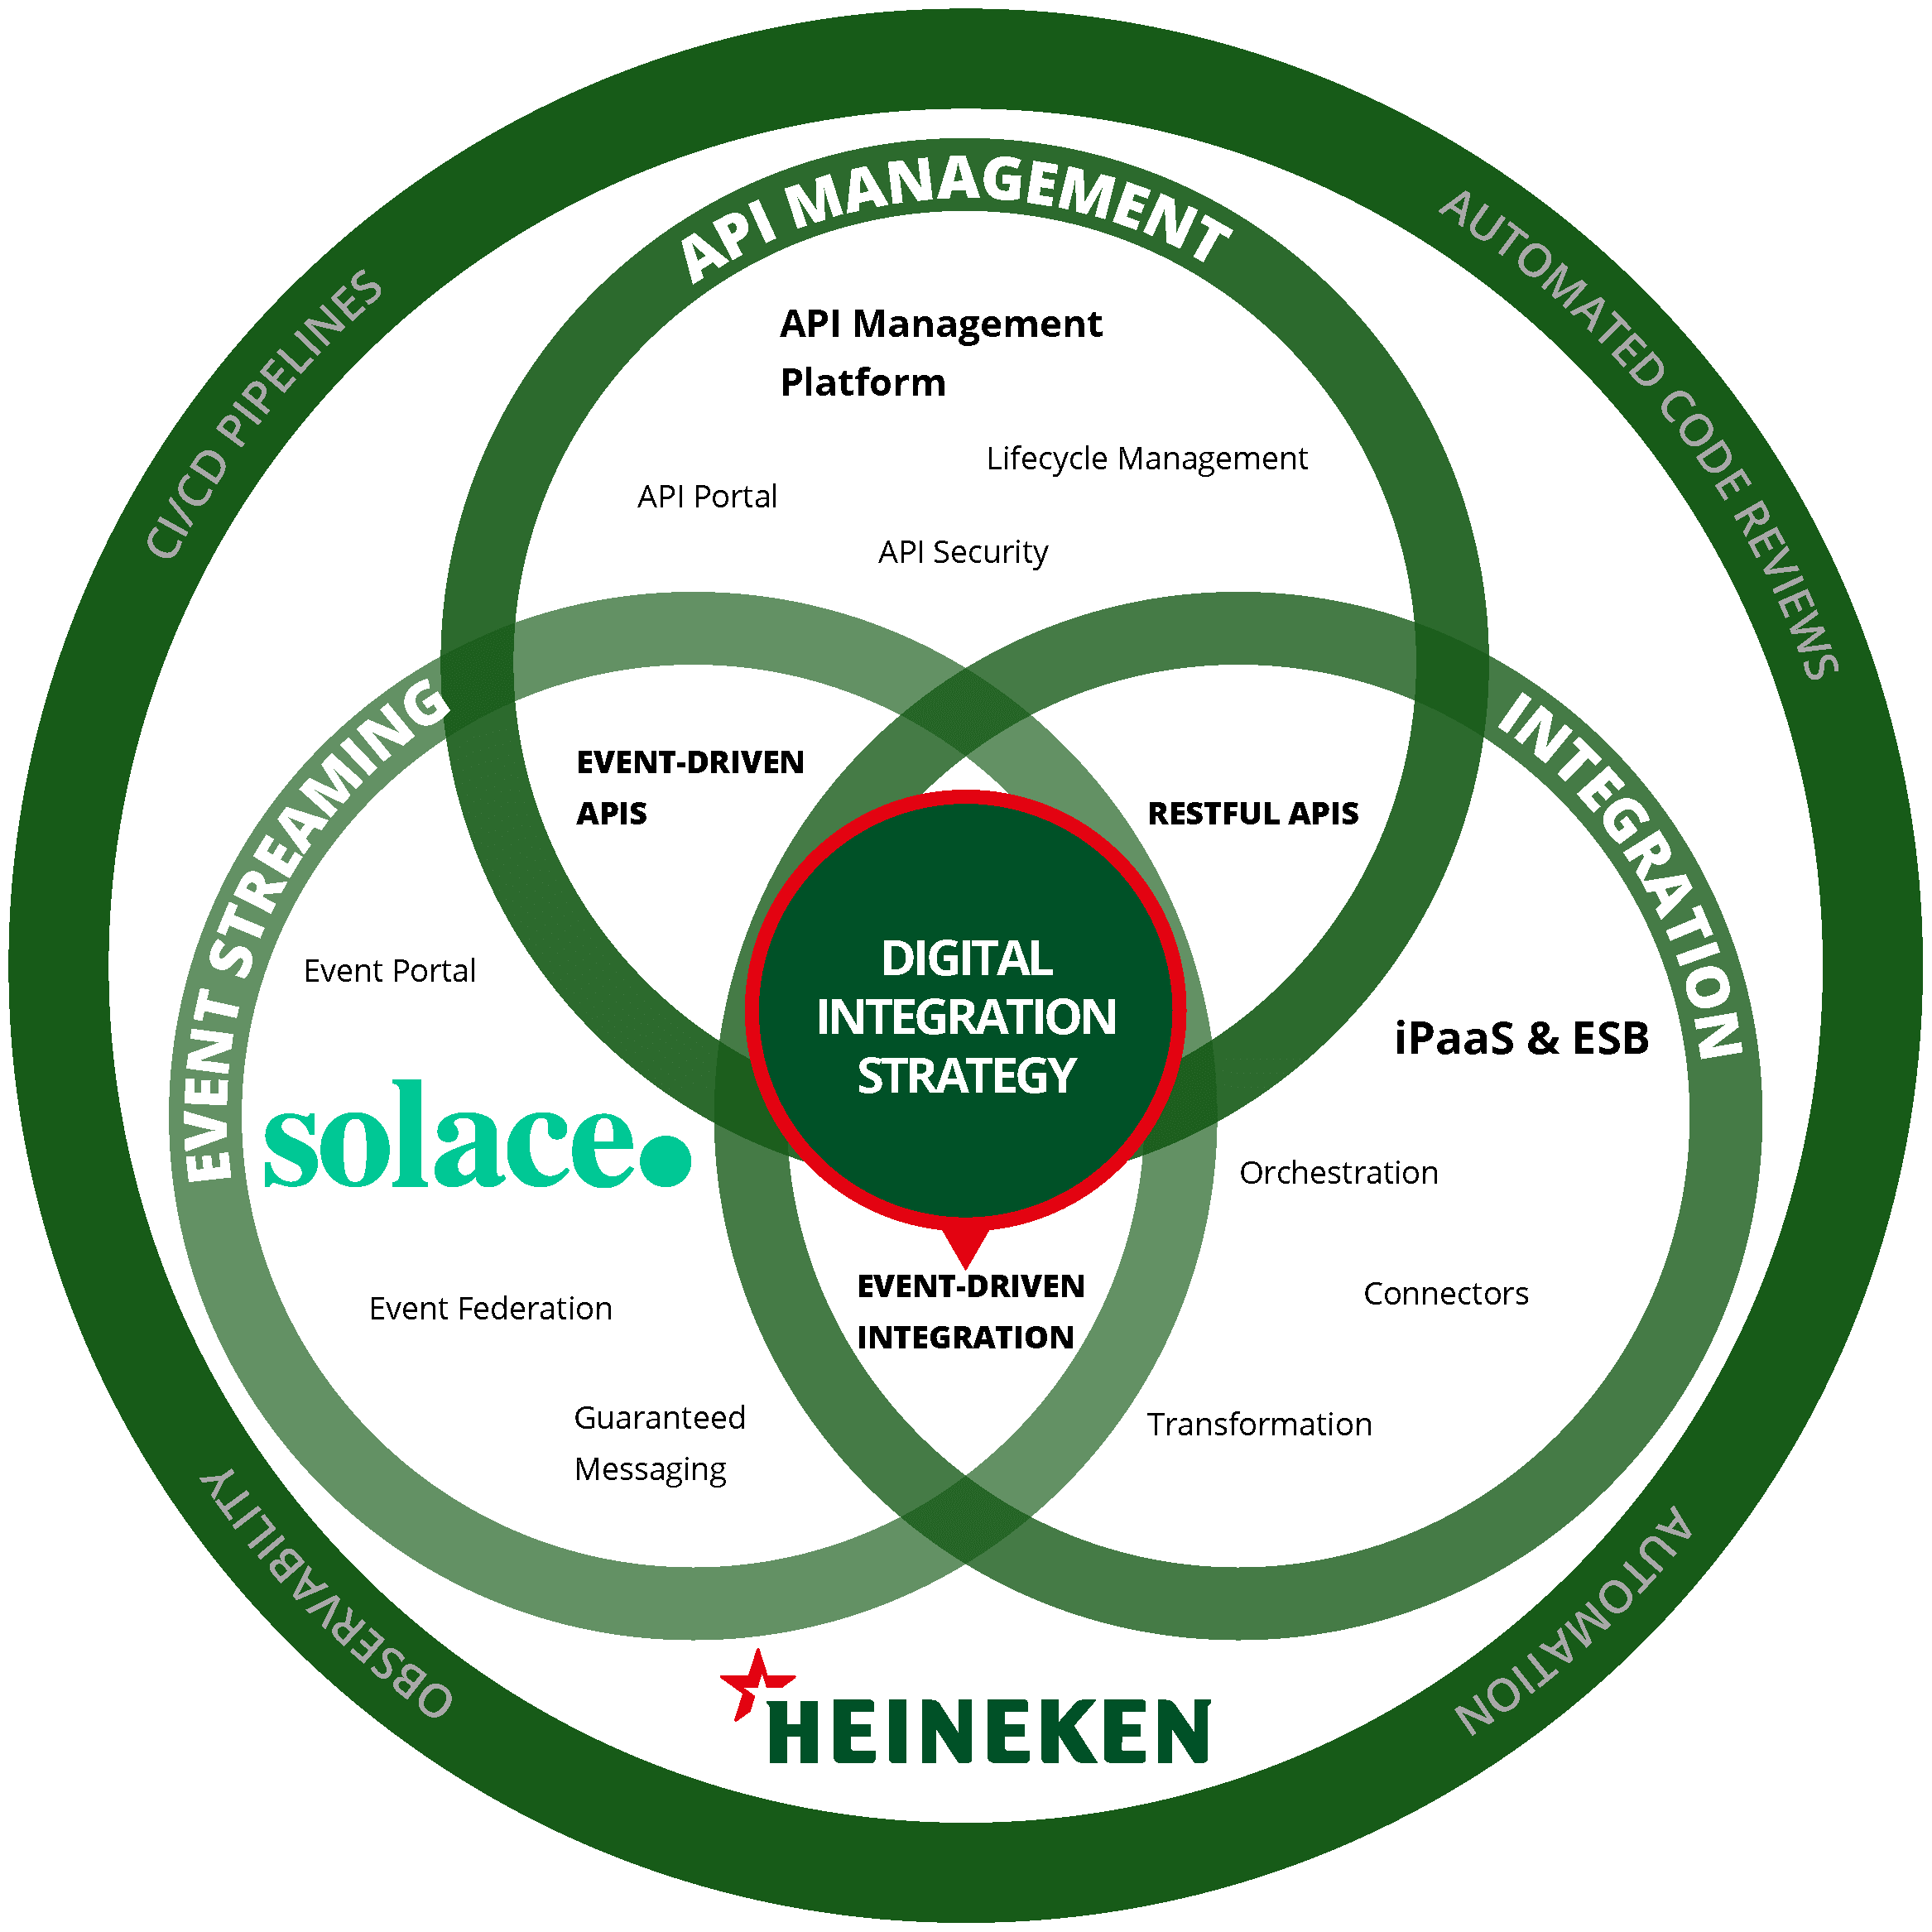 HEINEKEN’s digital integration strategy